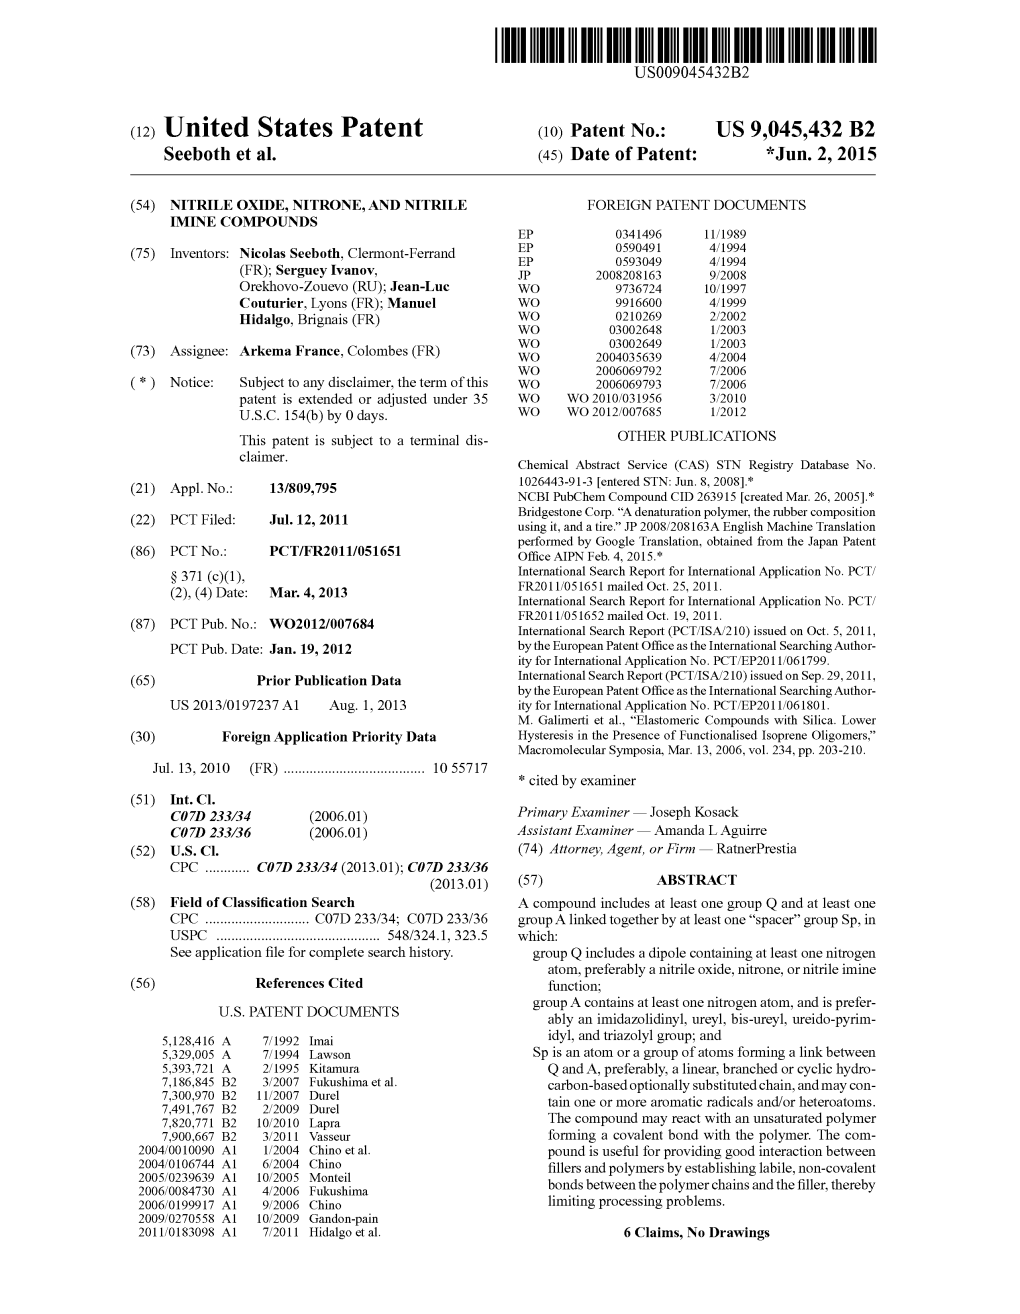 (12) United States Patent (10) Patent No.: US 9,045,432 B2 Seeboth Et Al